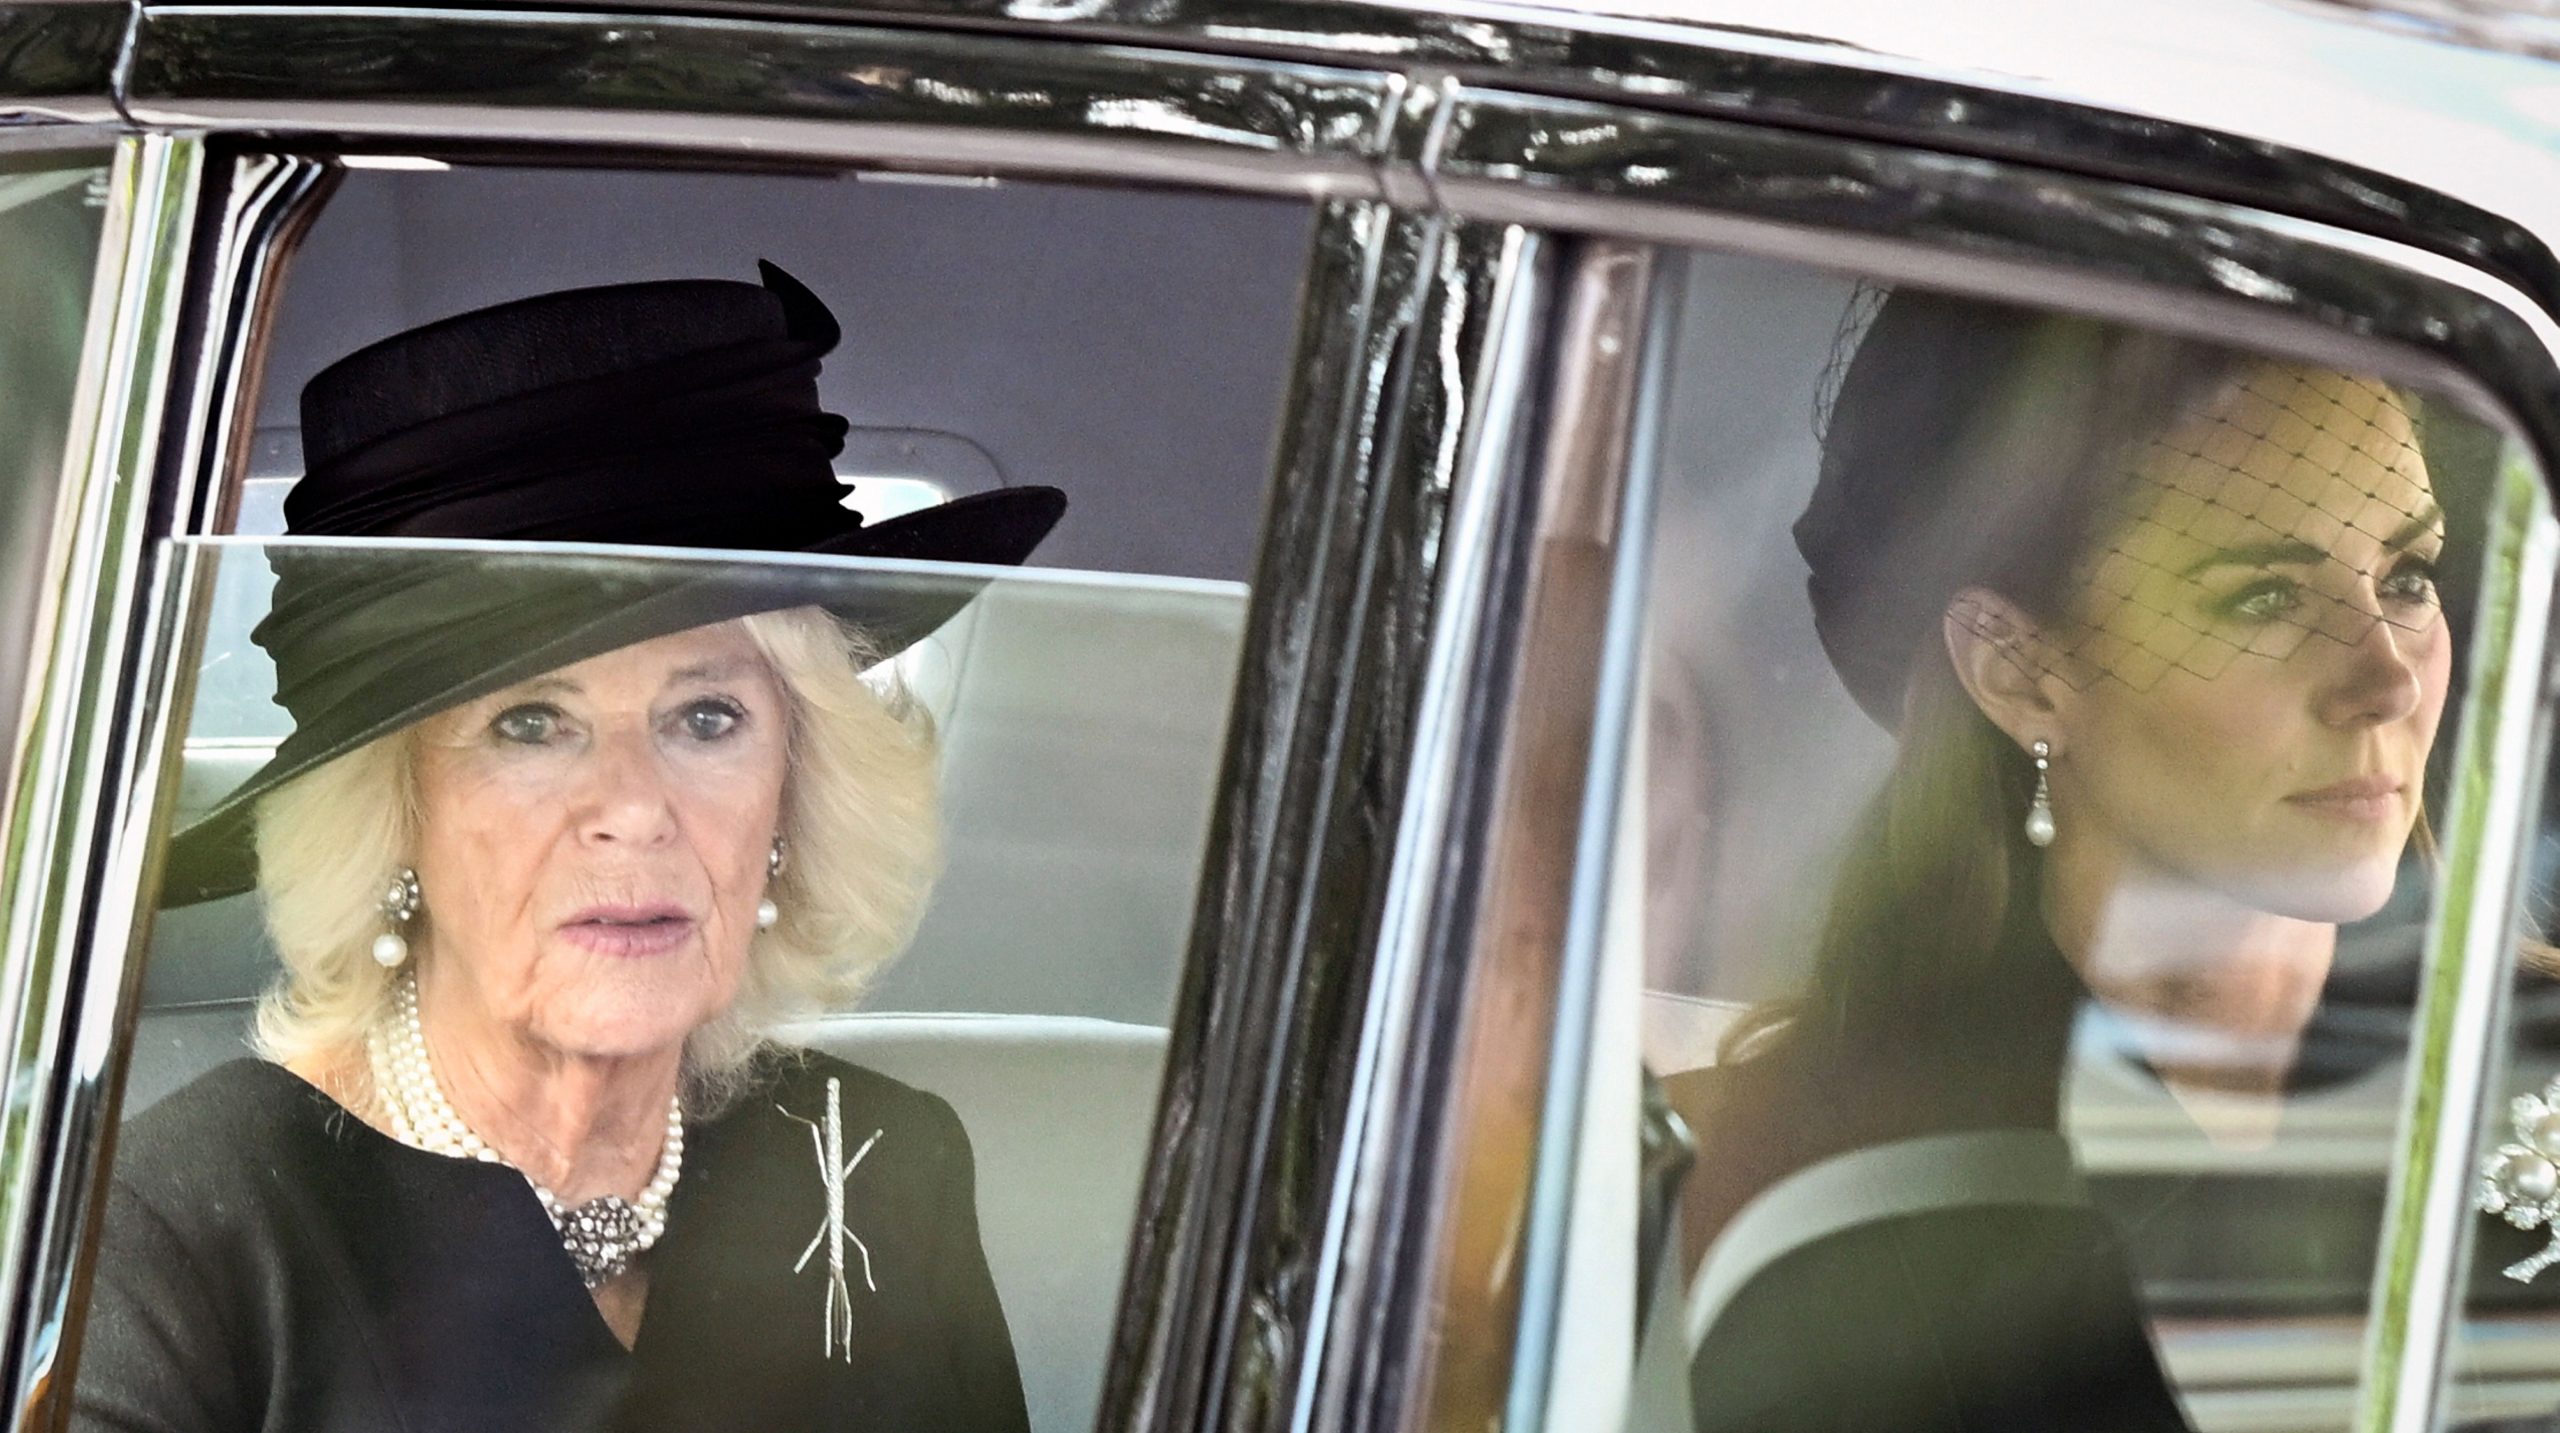 Queen consort Camilla on Elizabeth II: Will always remember her smile